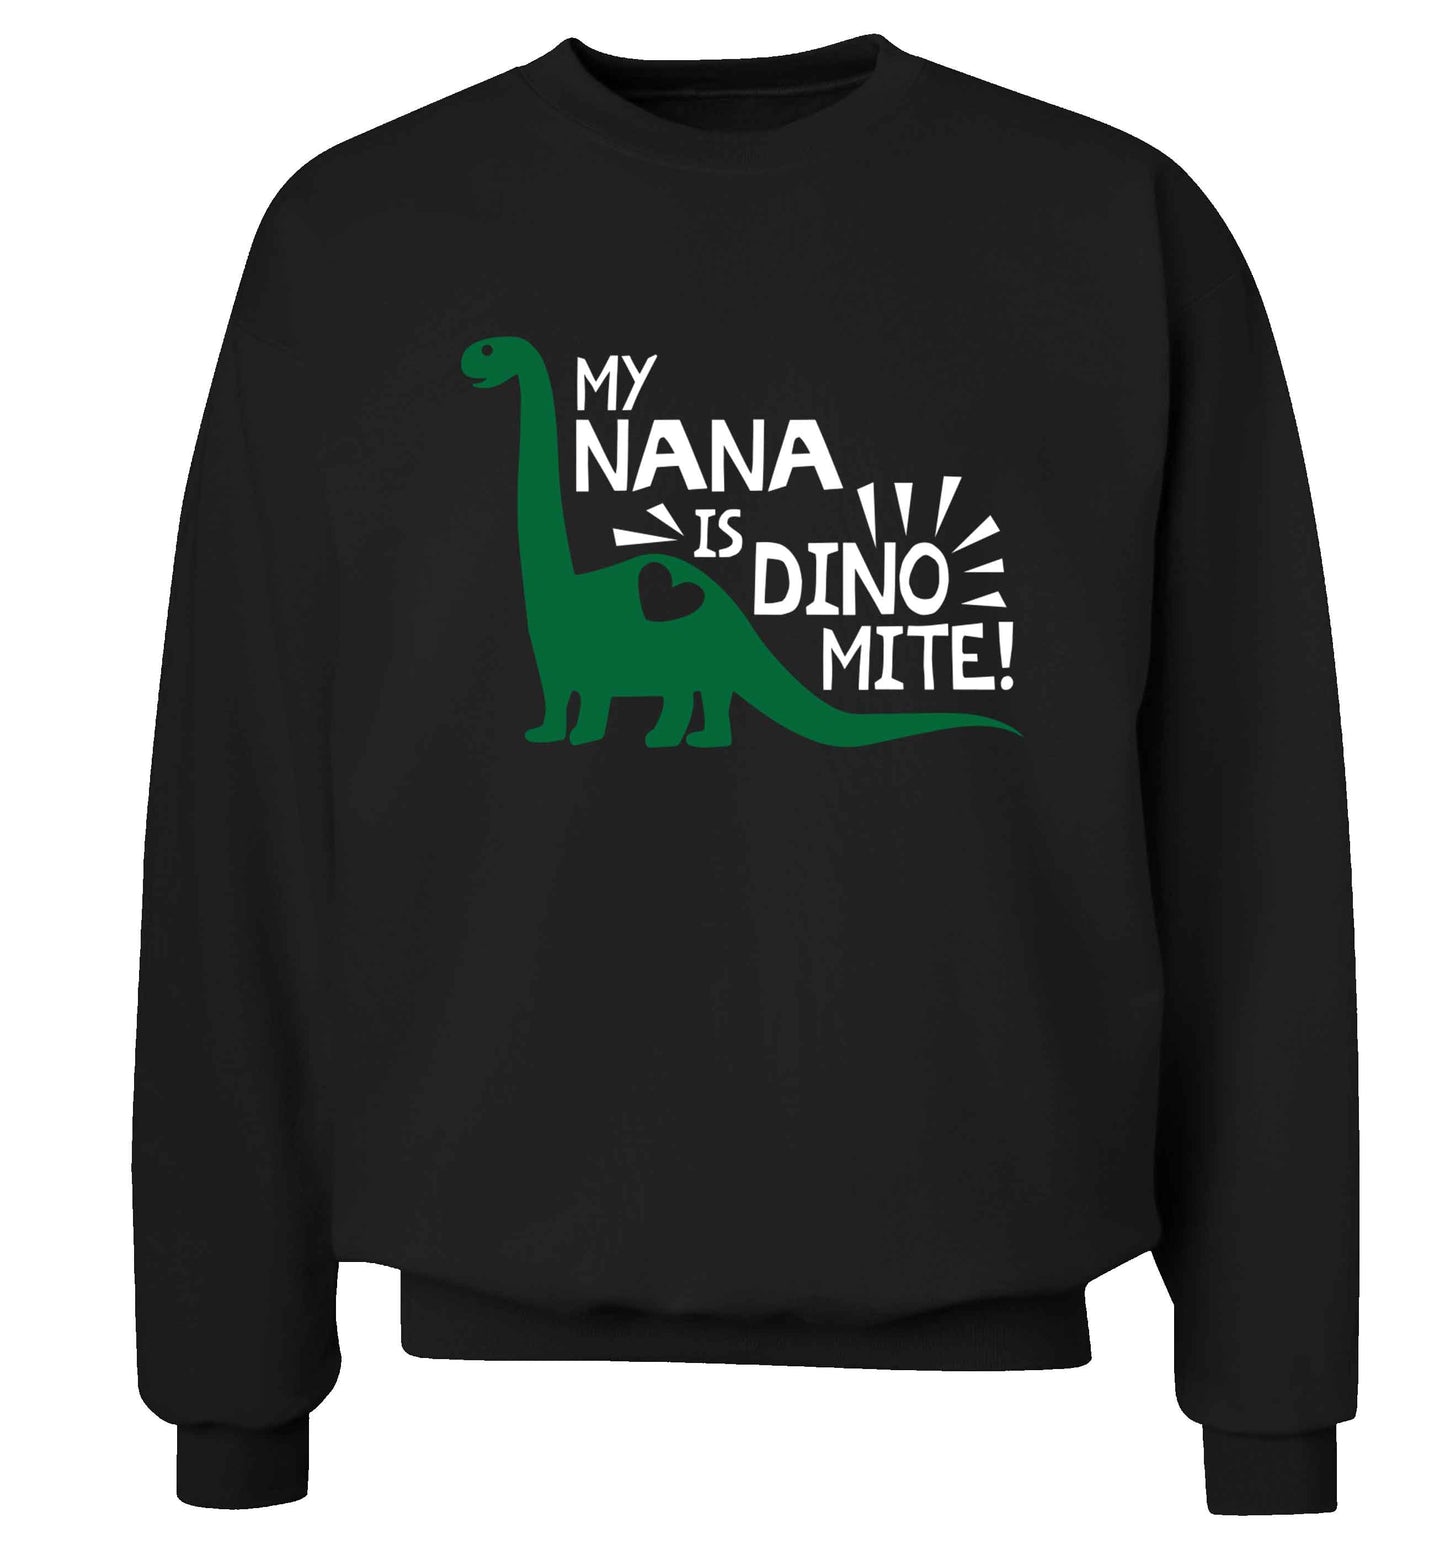 My nana is dinomite! Adult's unisex black Sweater 2XL